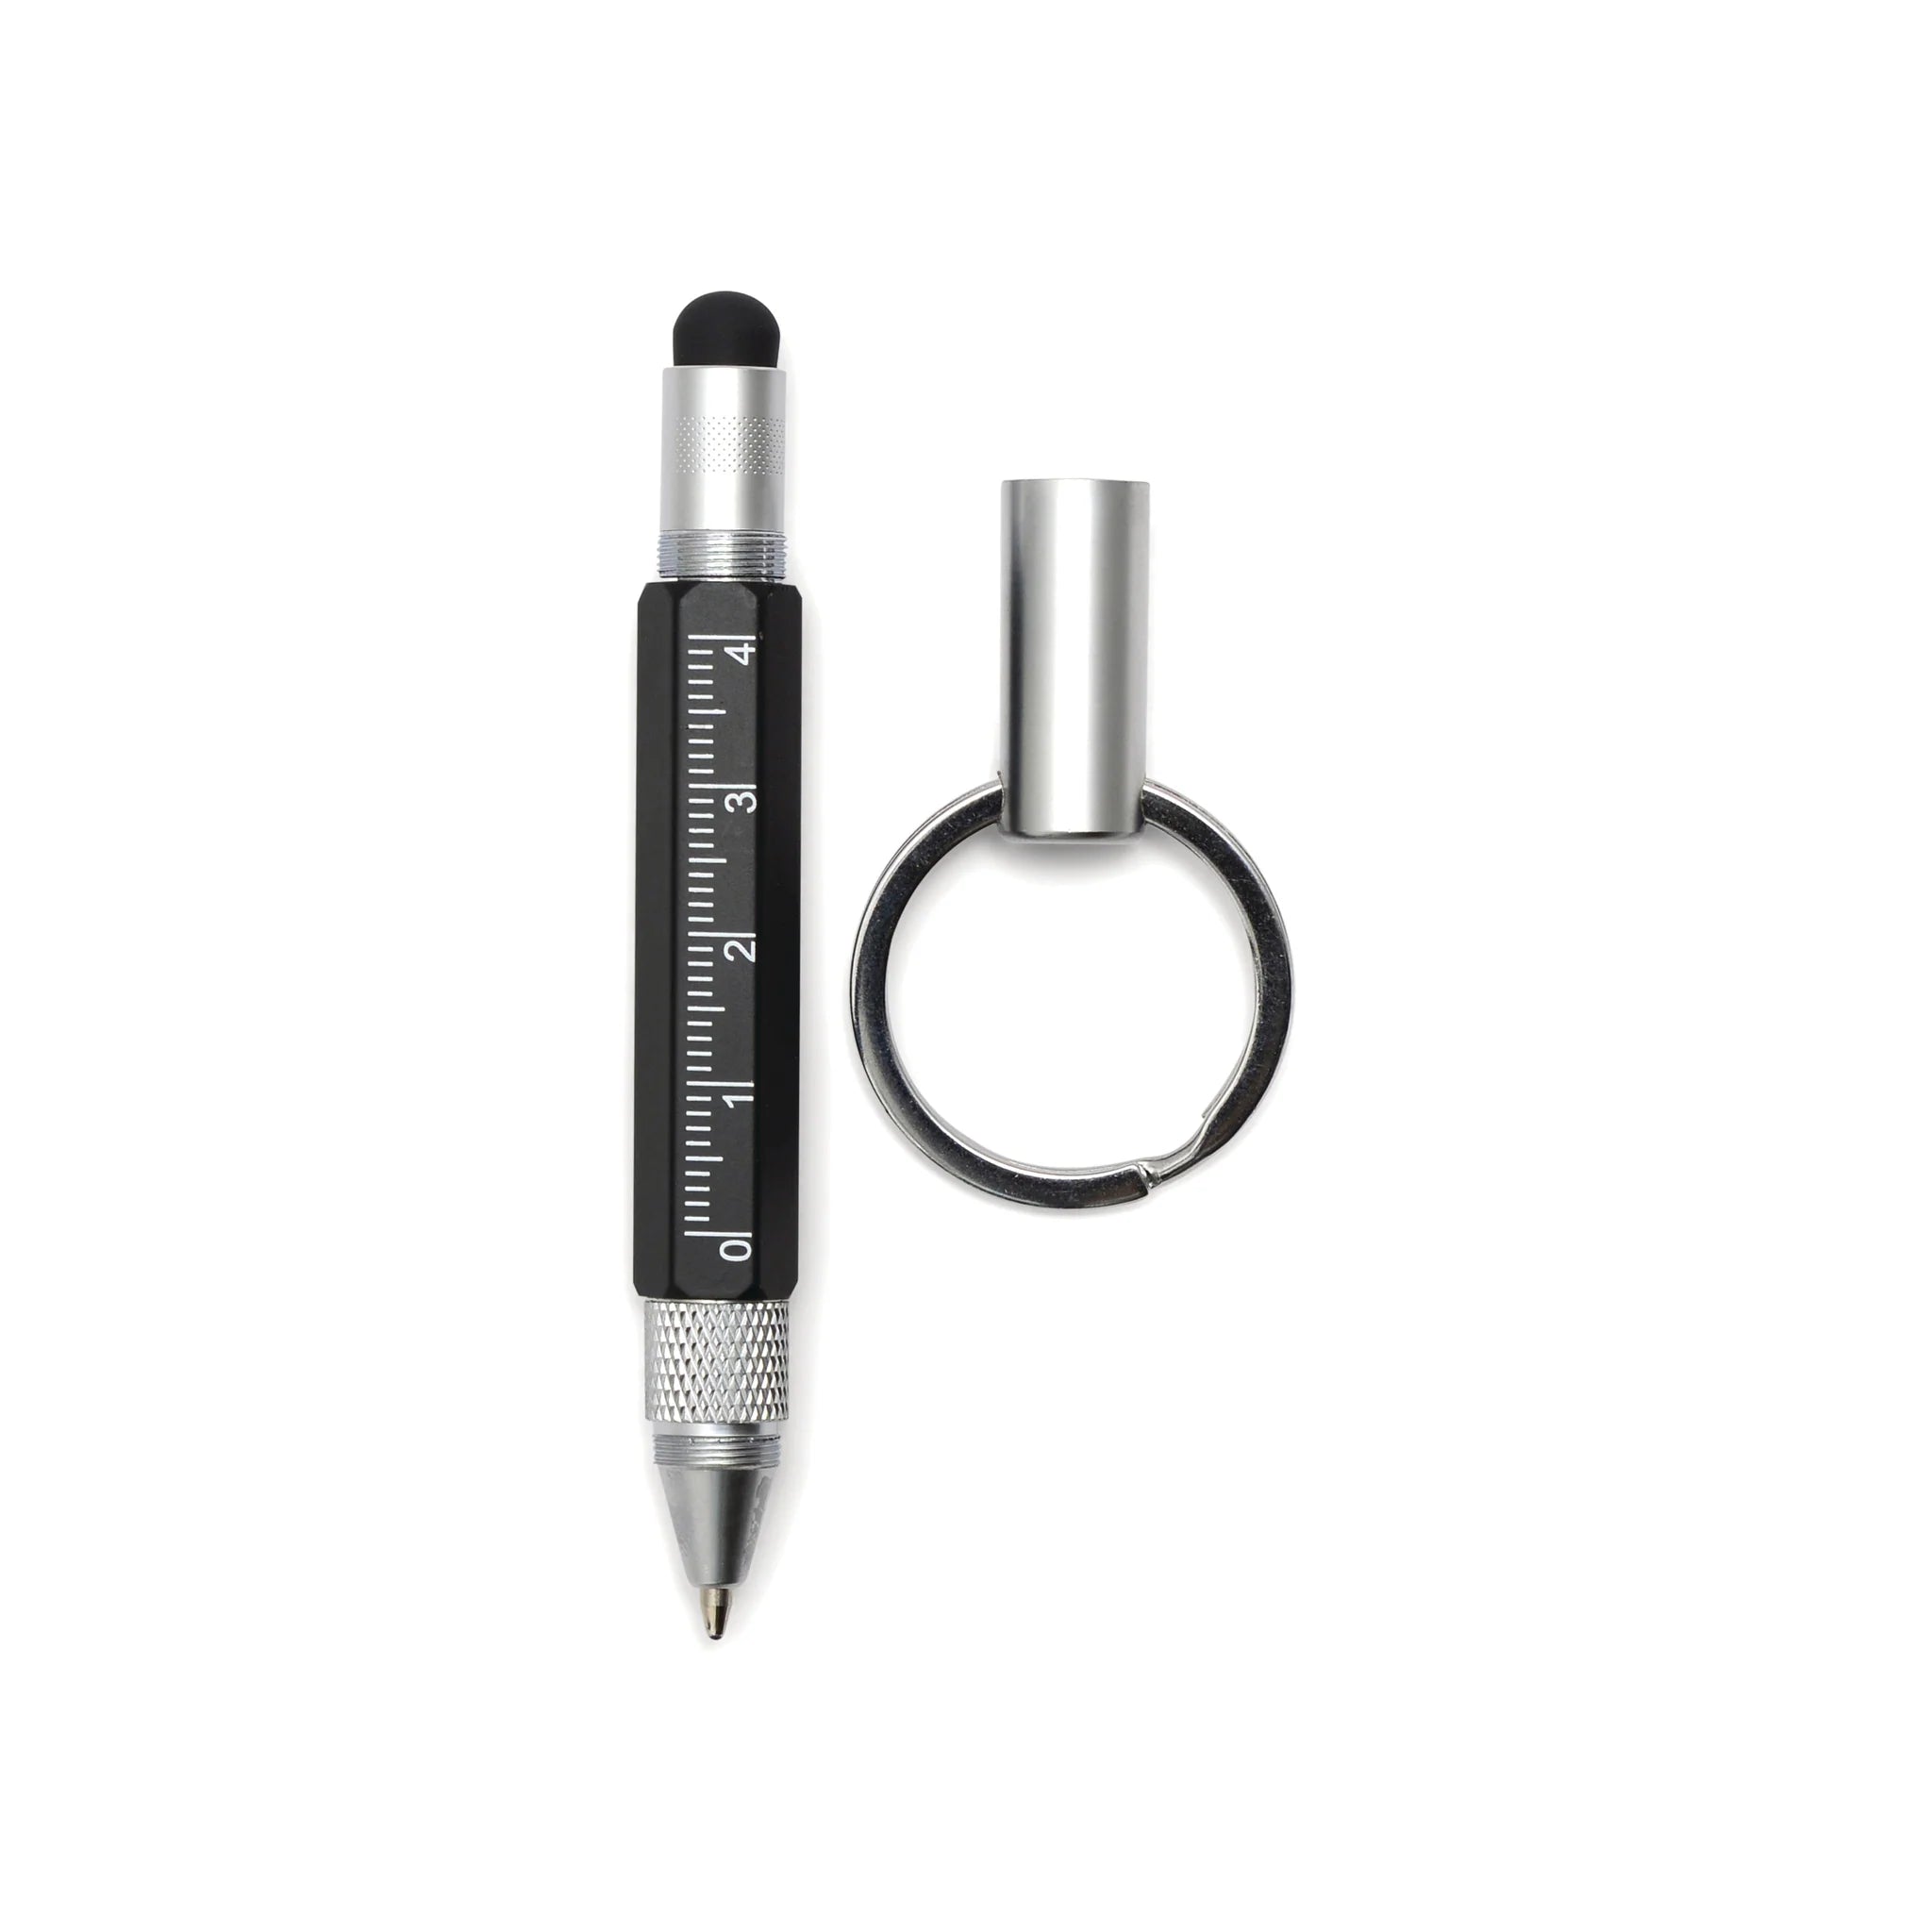 Gentlemen's Hardware mini pen multi tool – Presence of Piermont